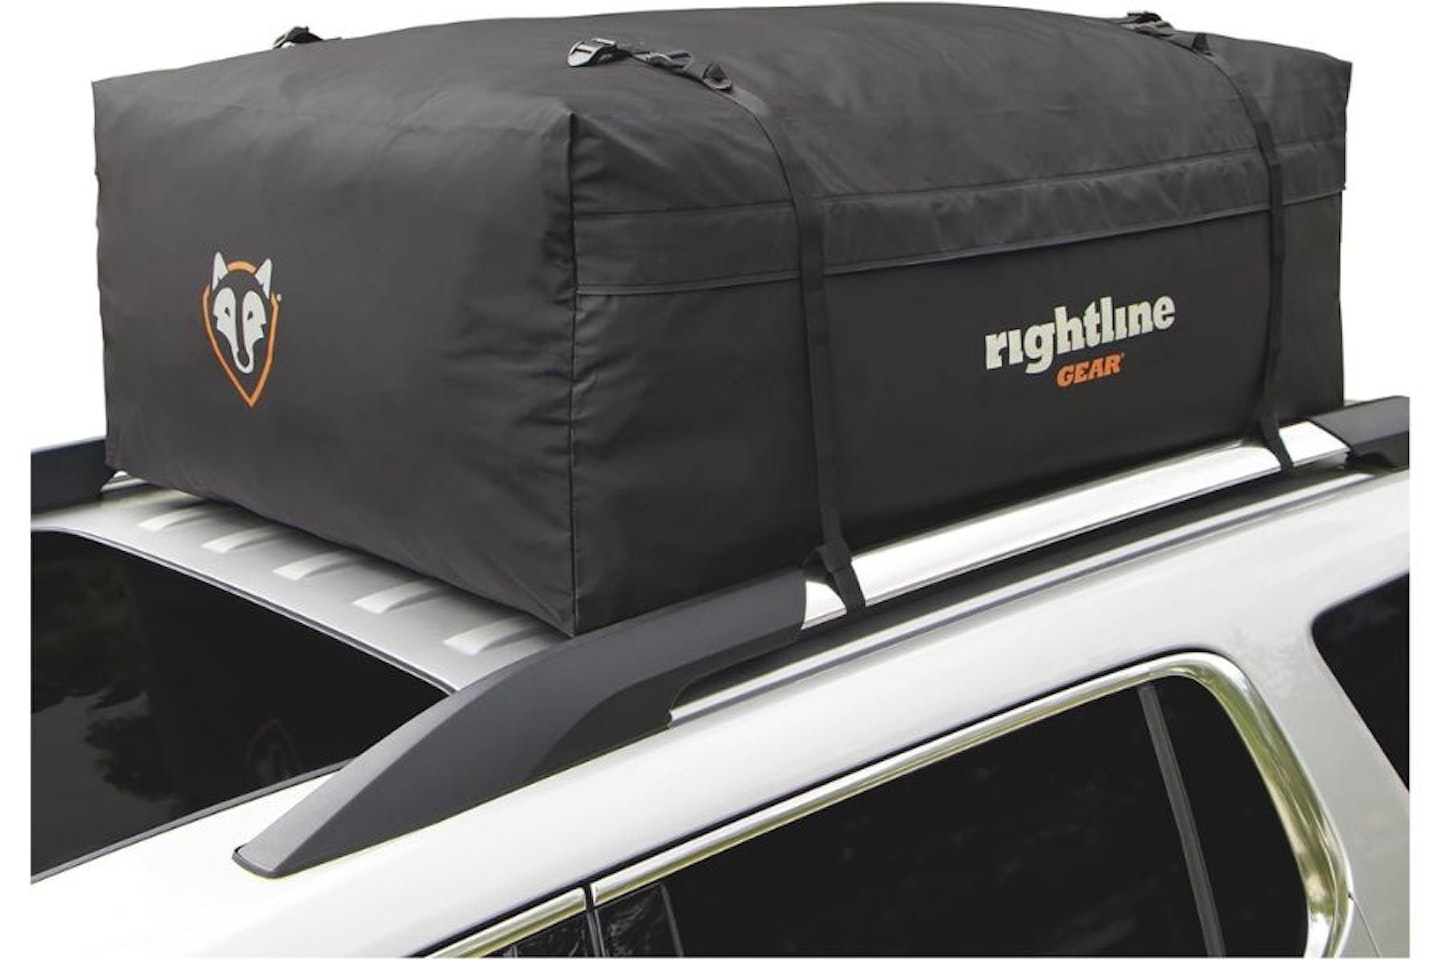 Rightline Gear roof bag